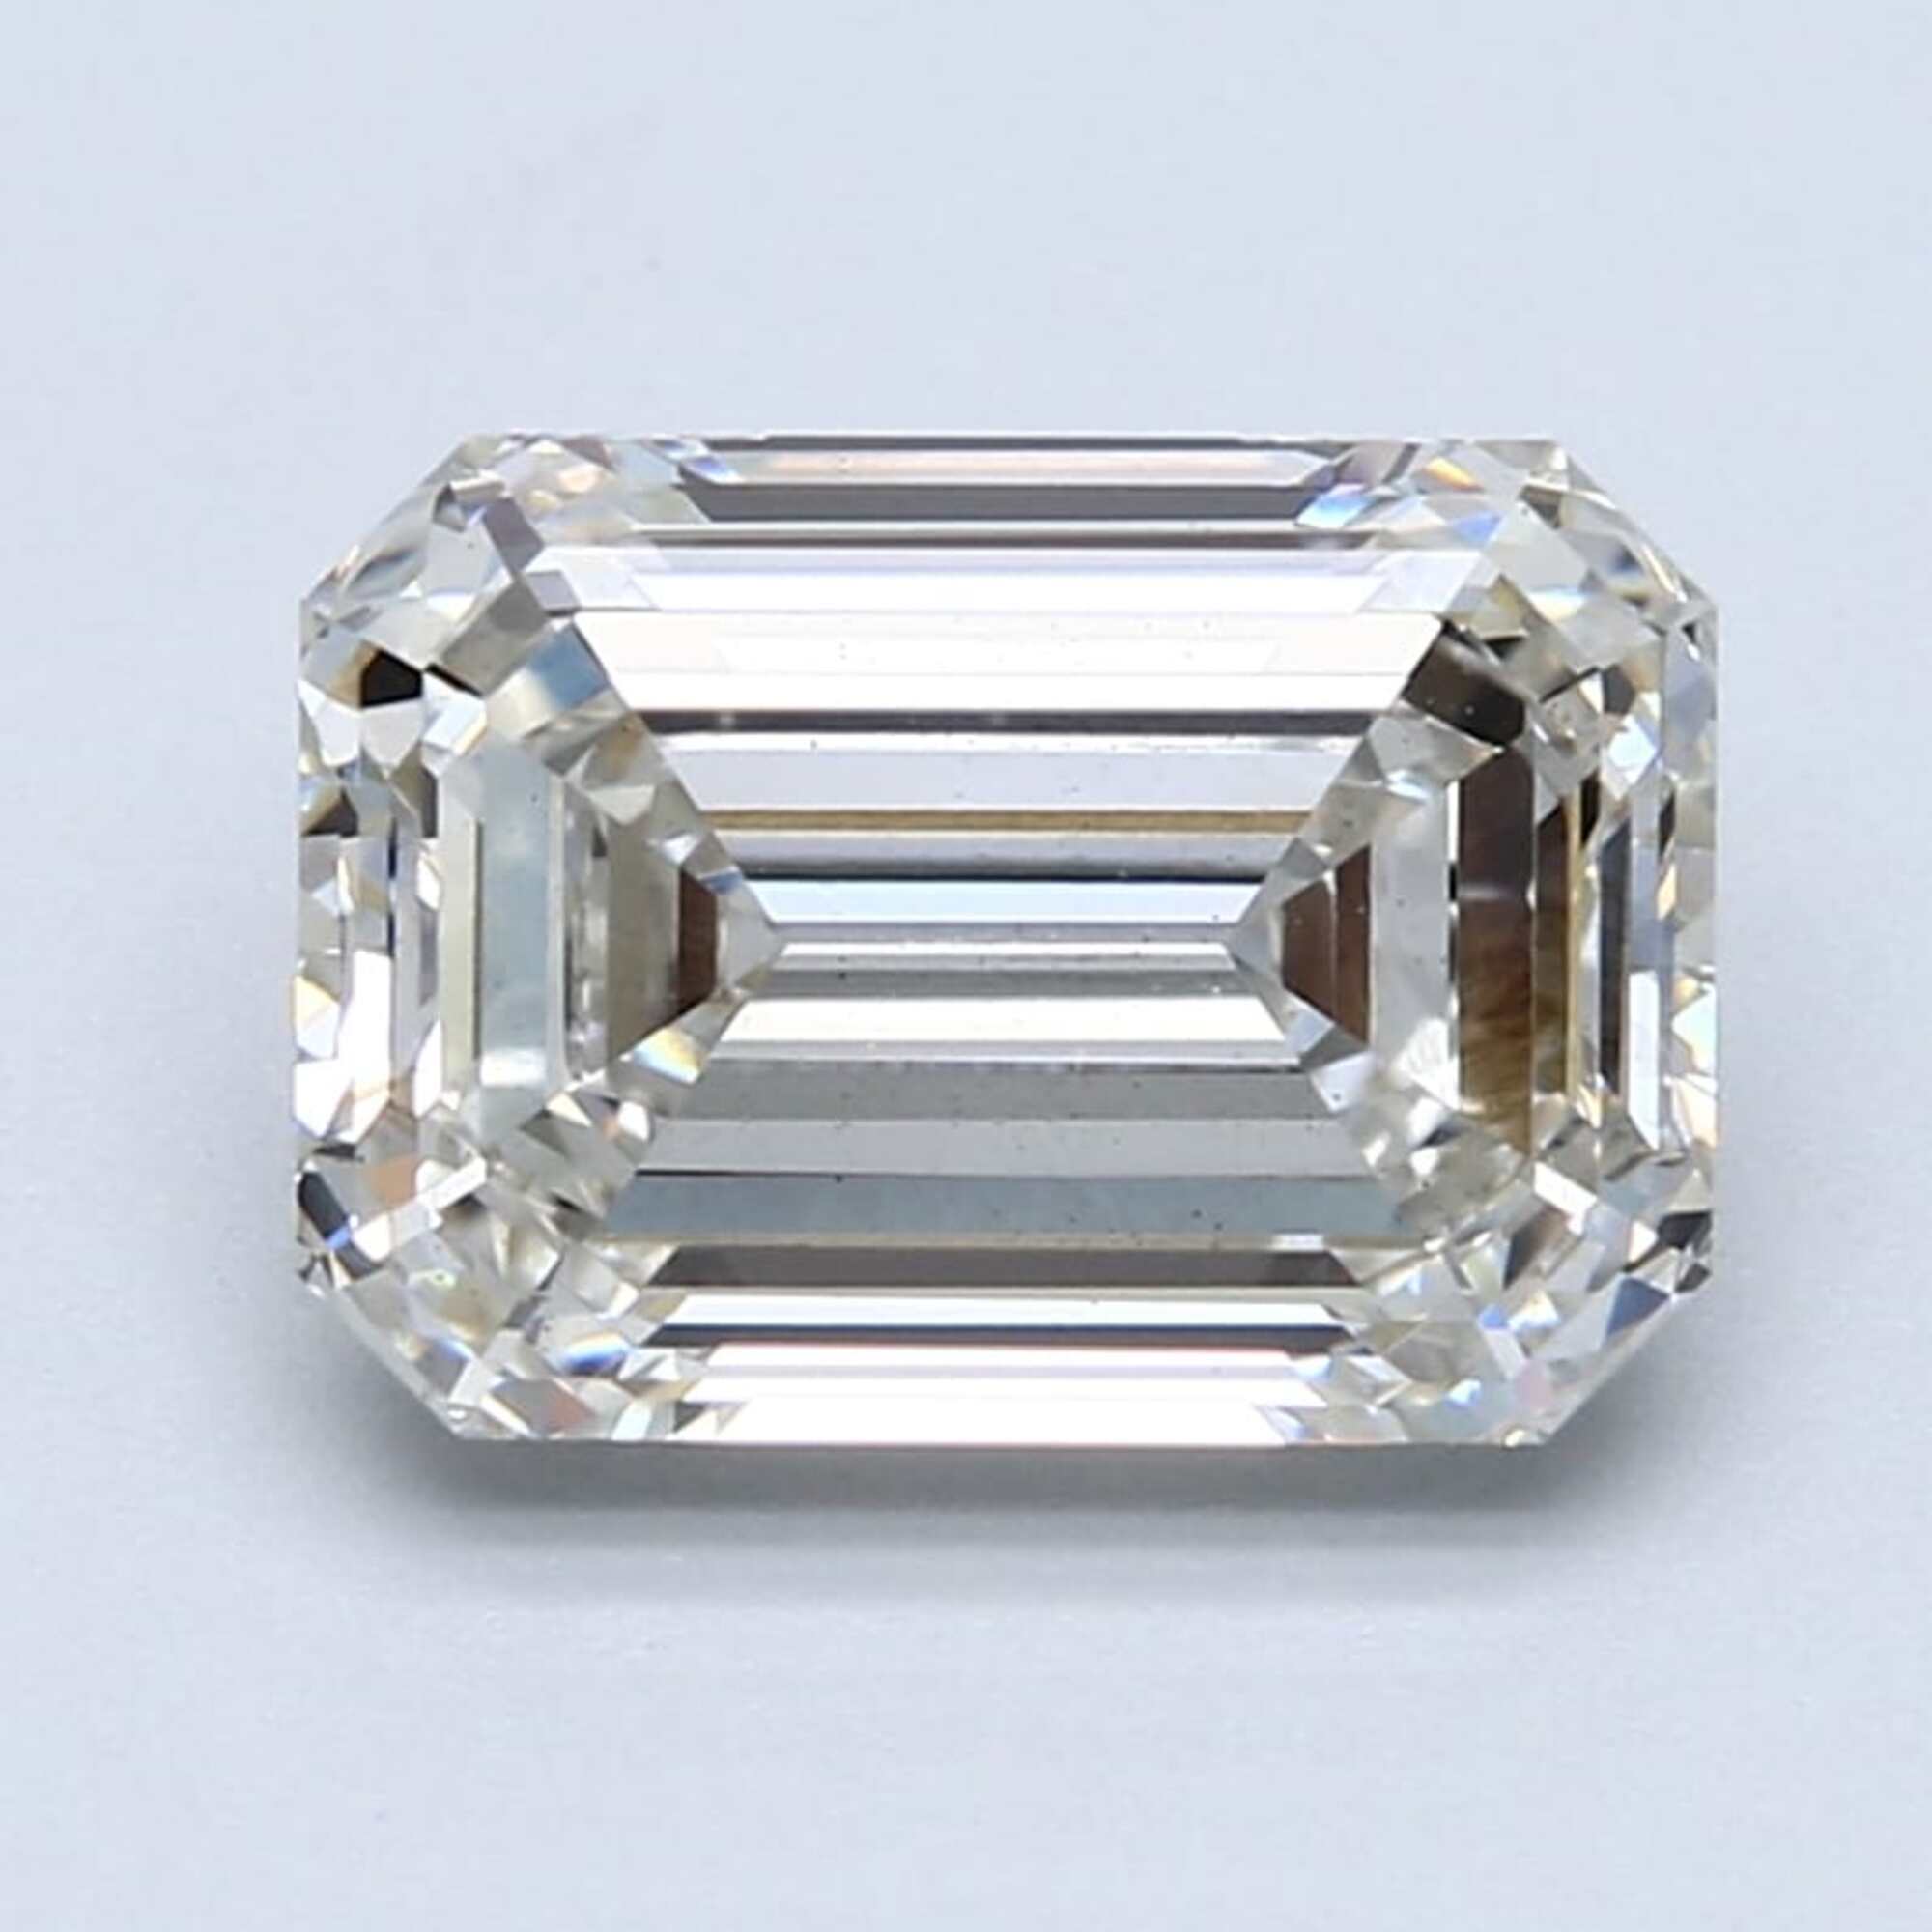 3.09 ct H VS2 Emerald cut Diamond